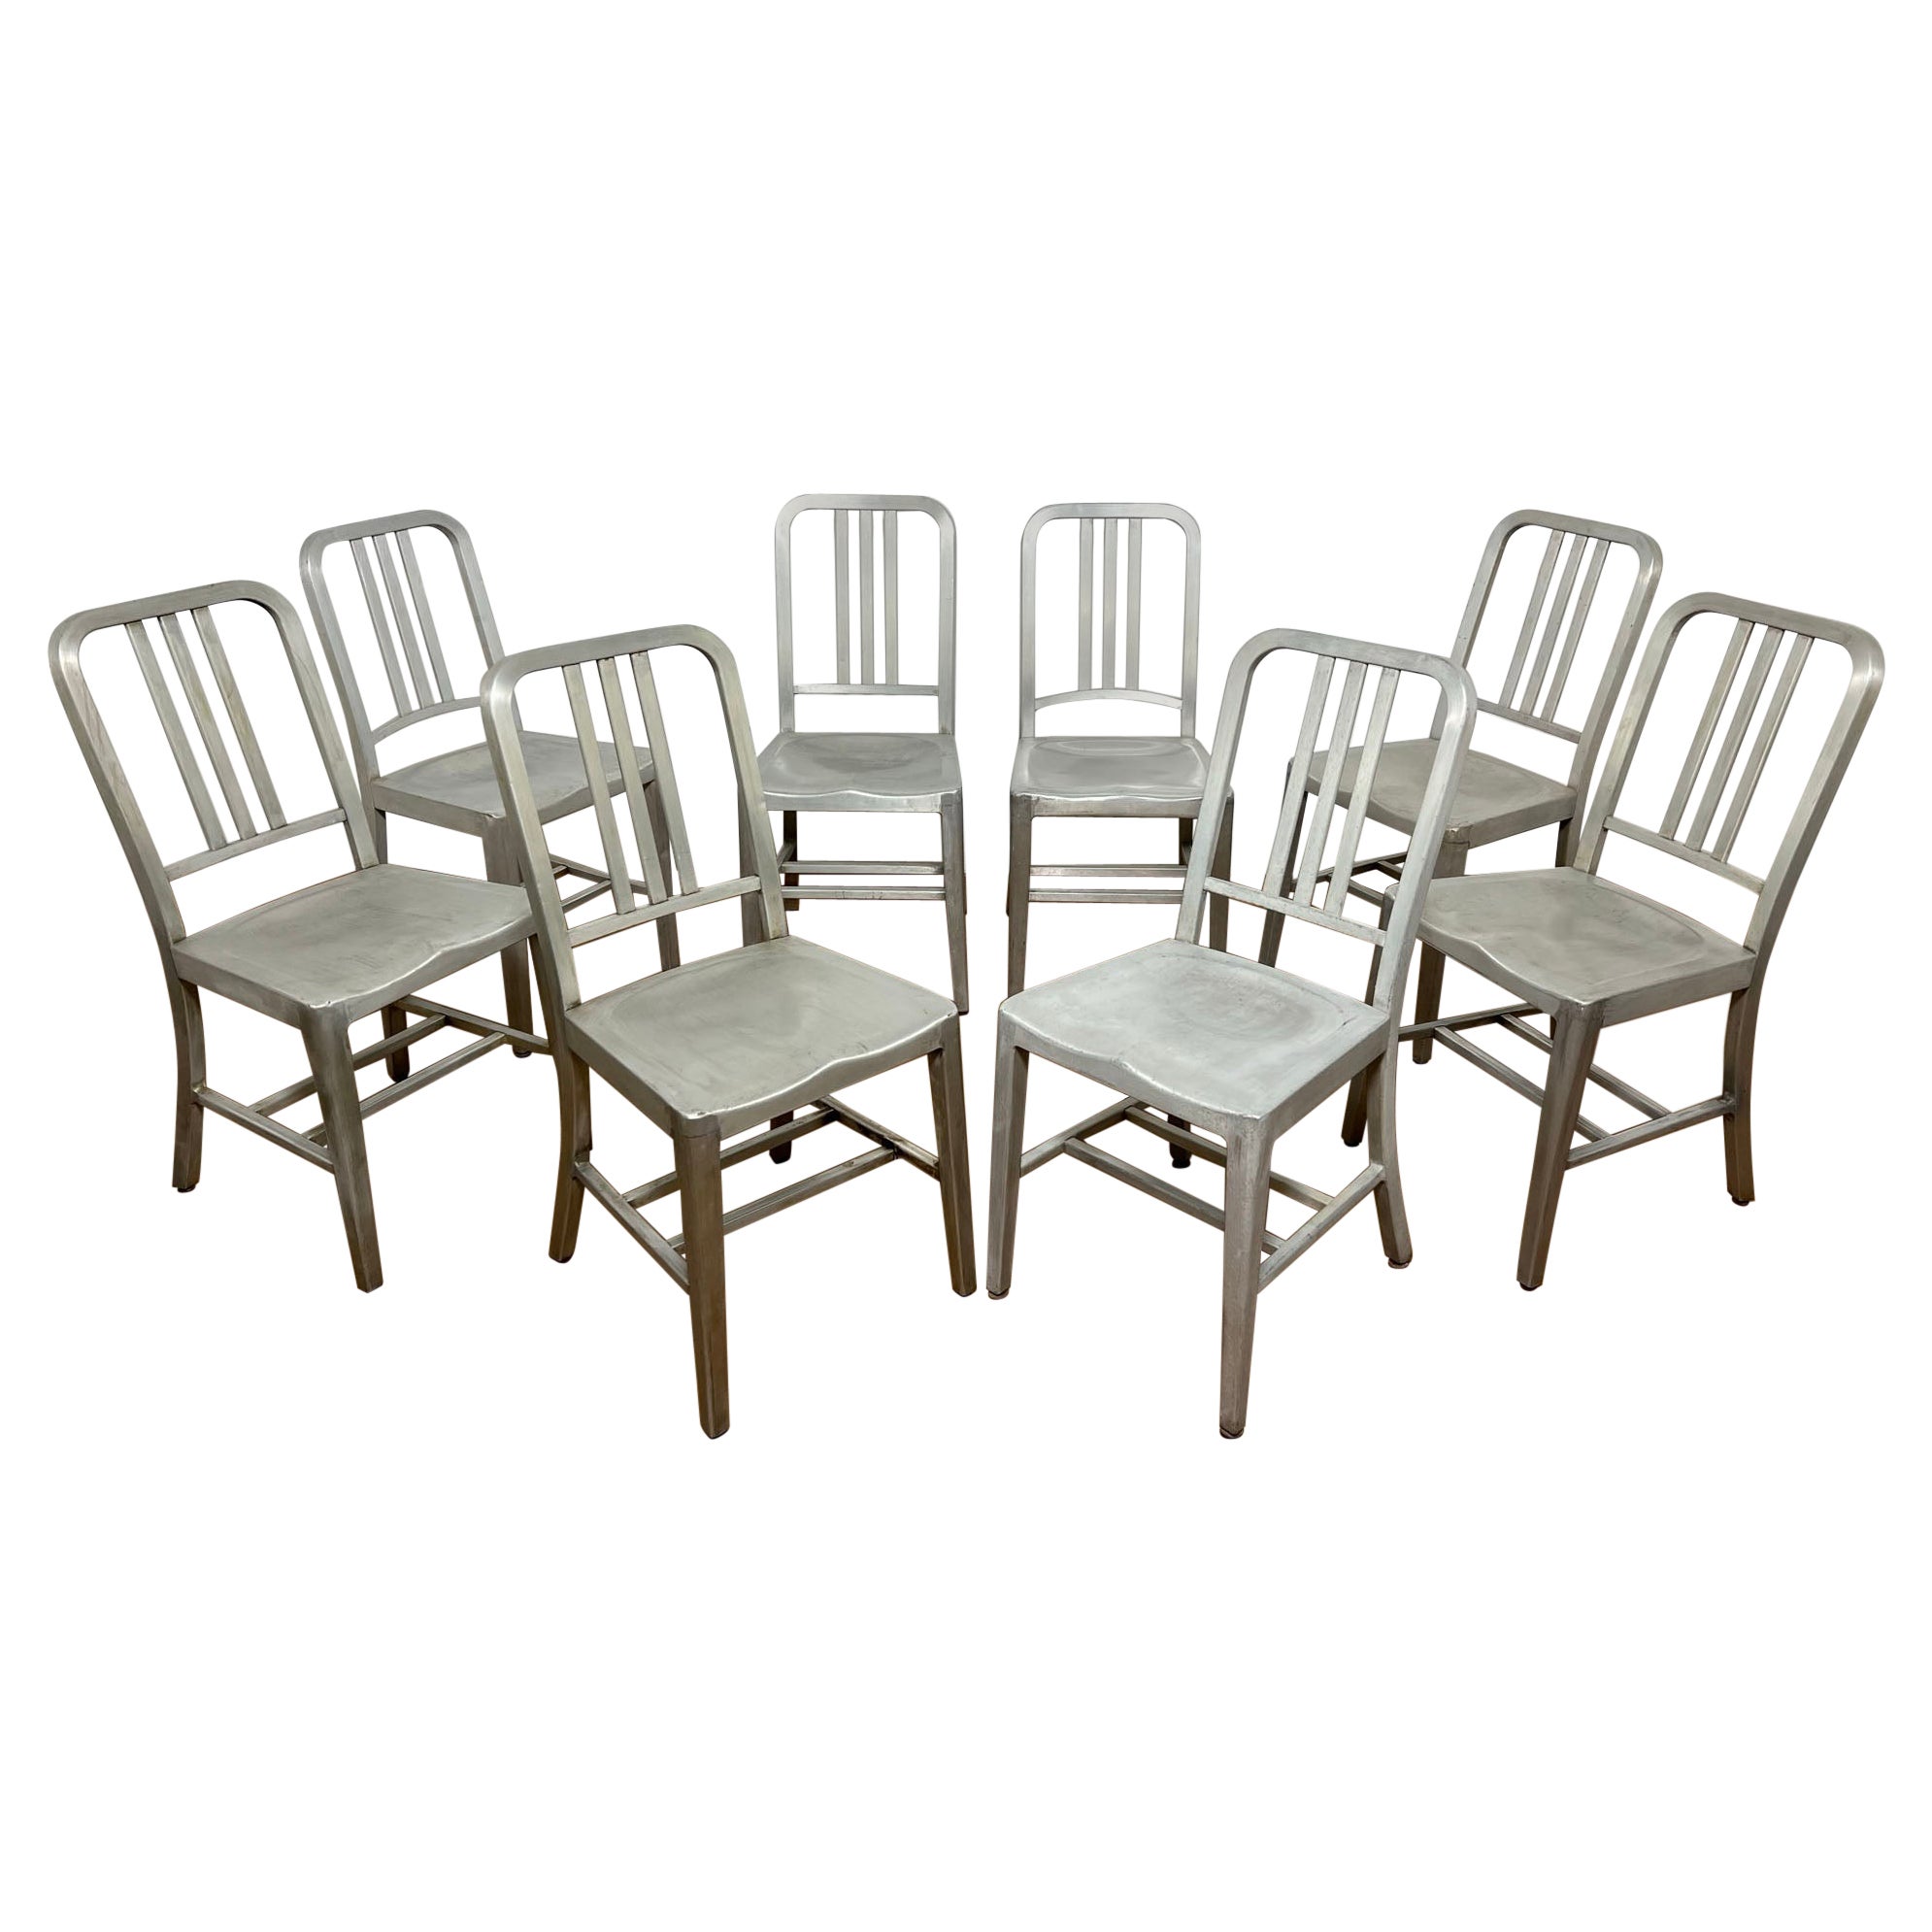 Set of Eight Original GoodForm "Navy" Side Chairs, Circa 1940s